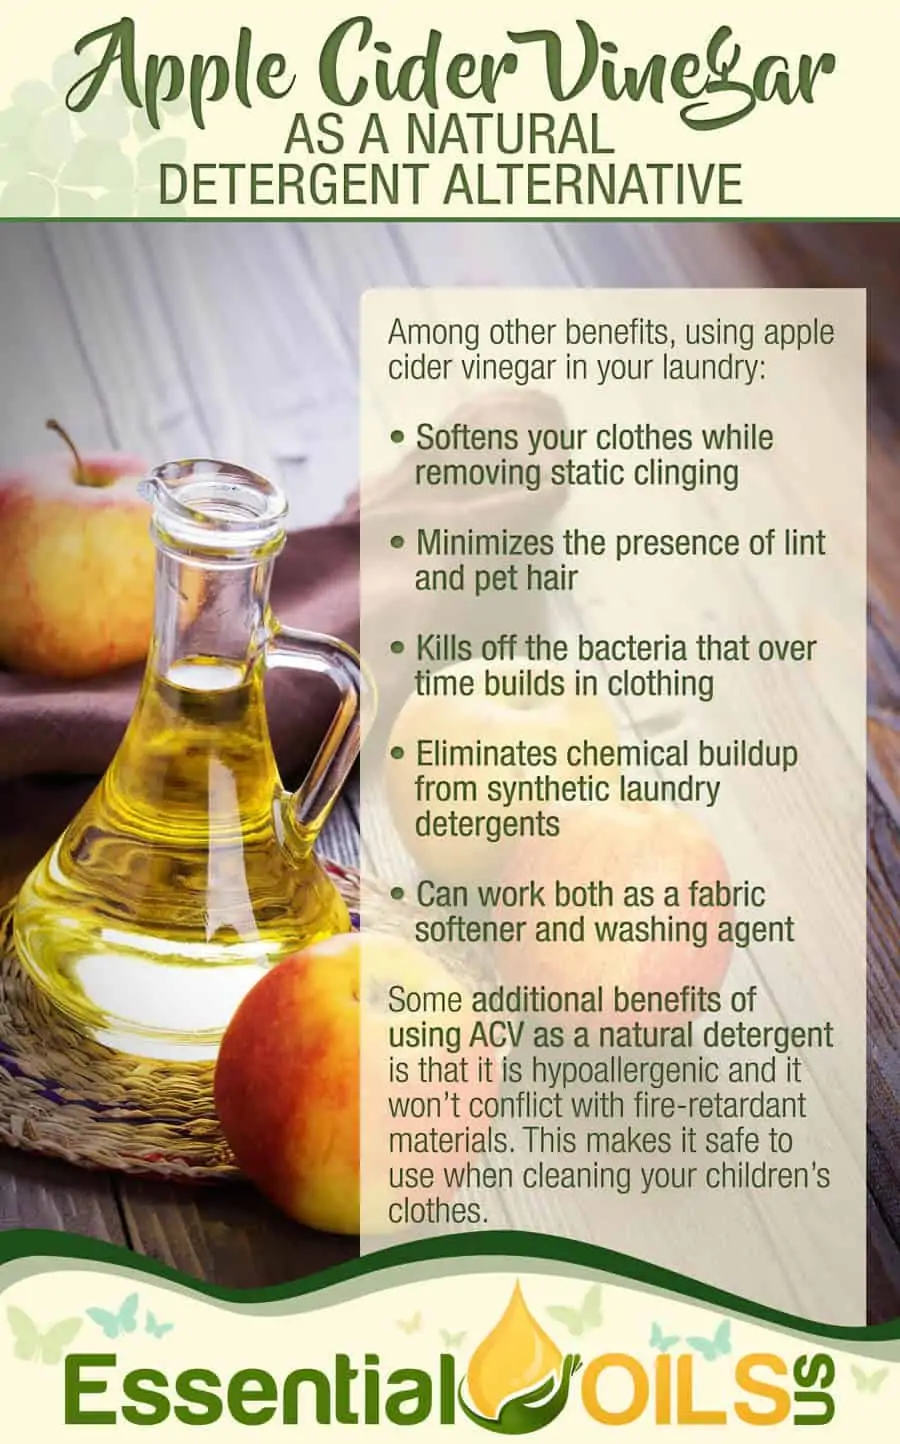 Apple Cider Vinegar - Benefits